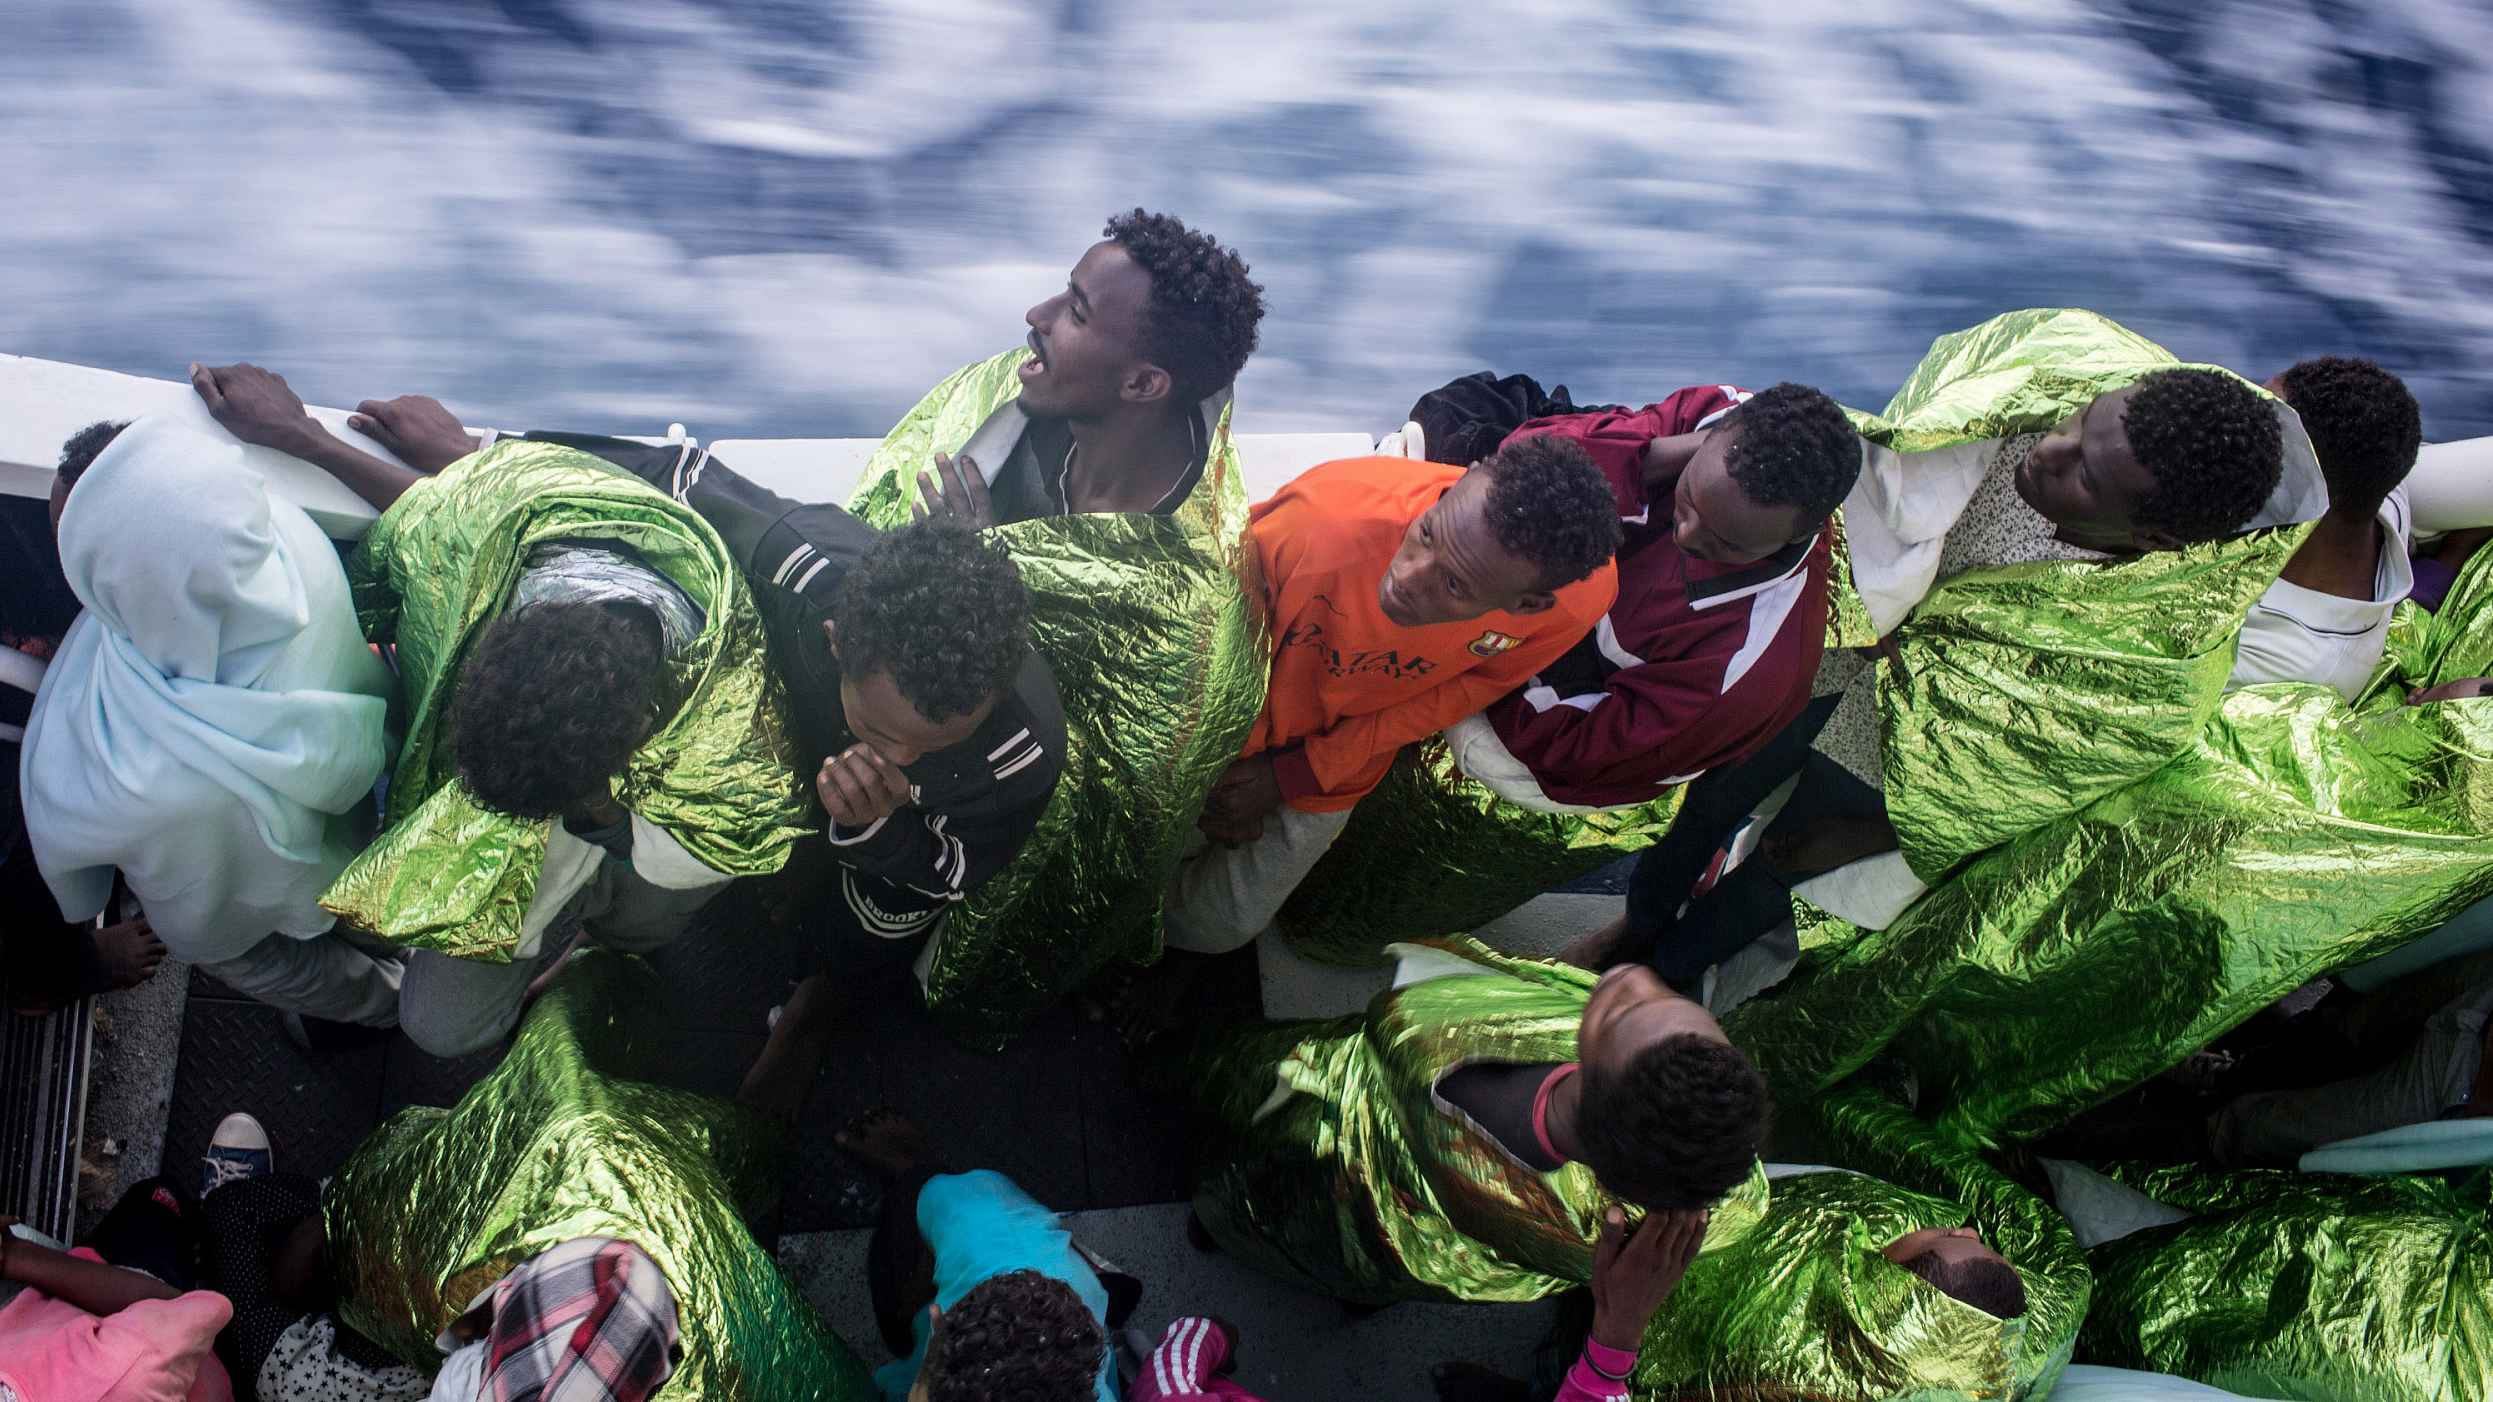 1530 Migrants Refugees Died Crossing Mediterranean So Far 2017 Cgtn 